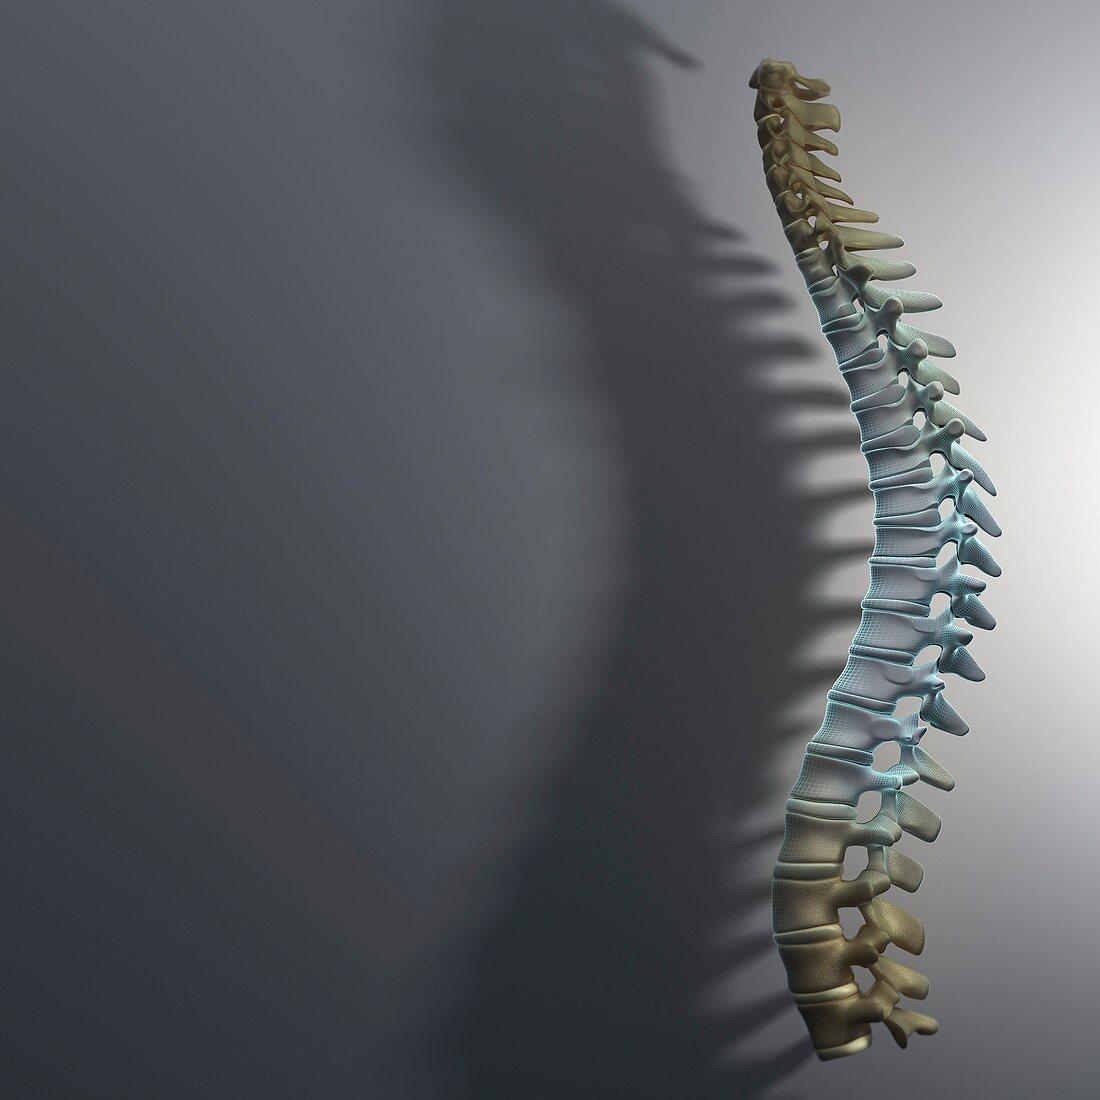 Spinal Anatomy, artwork